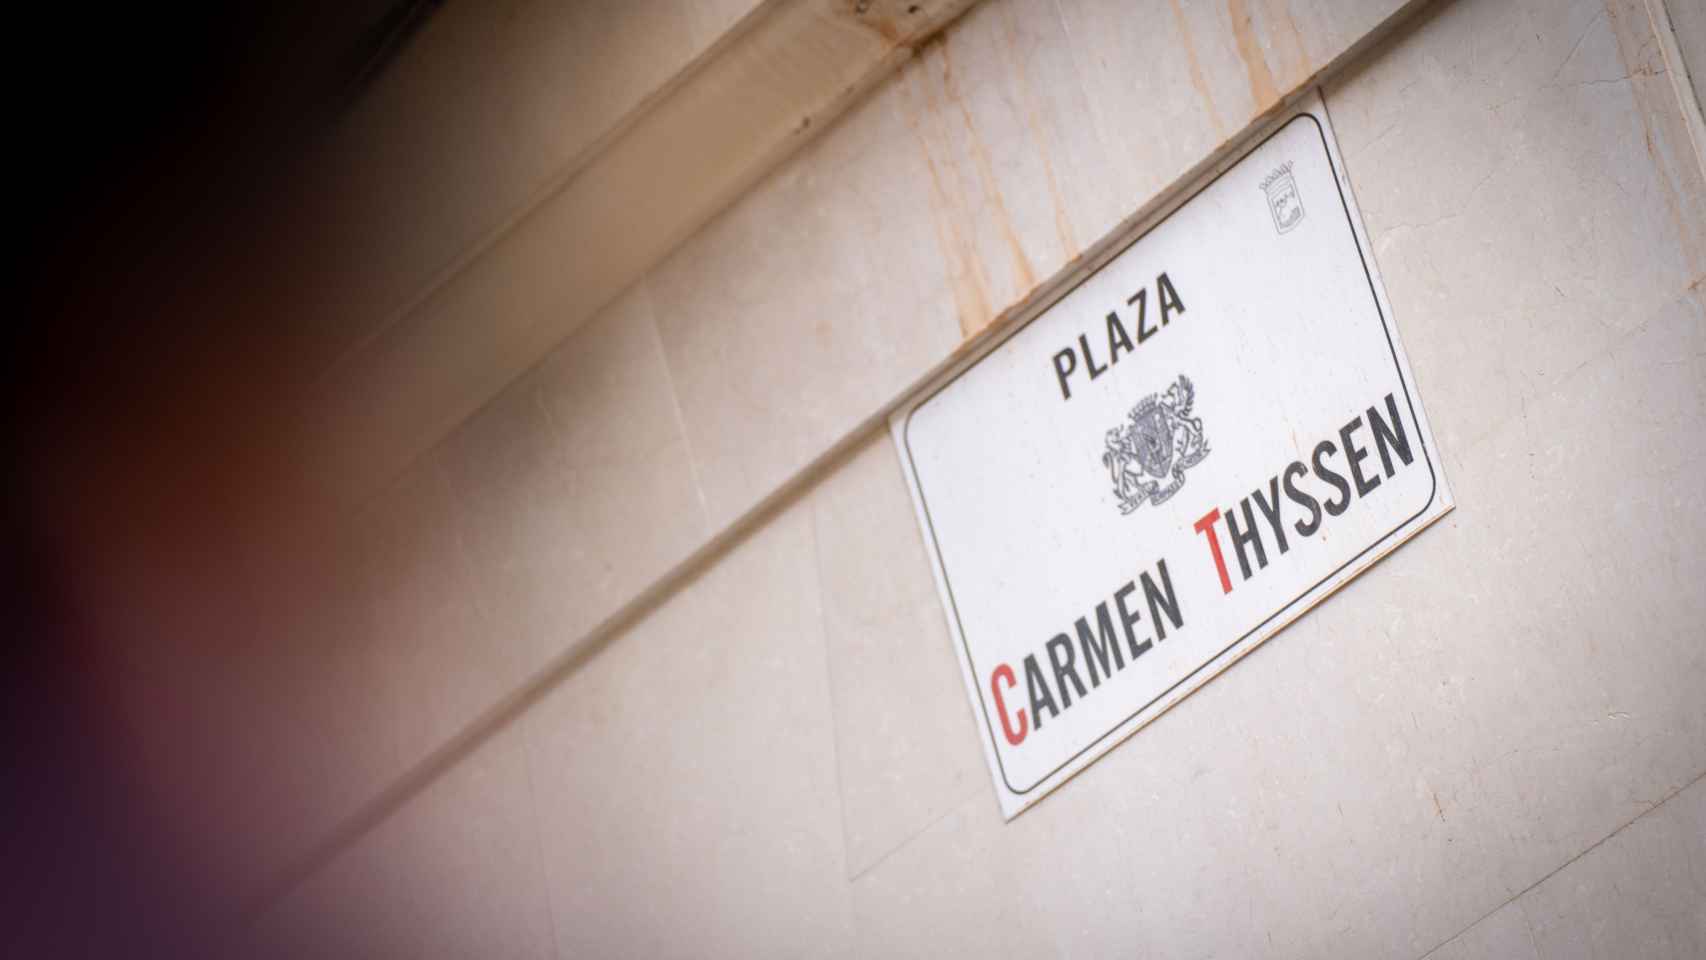 Plaza Carmen Thyssen.